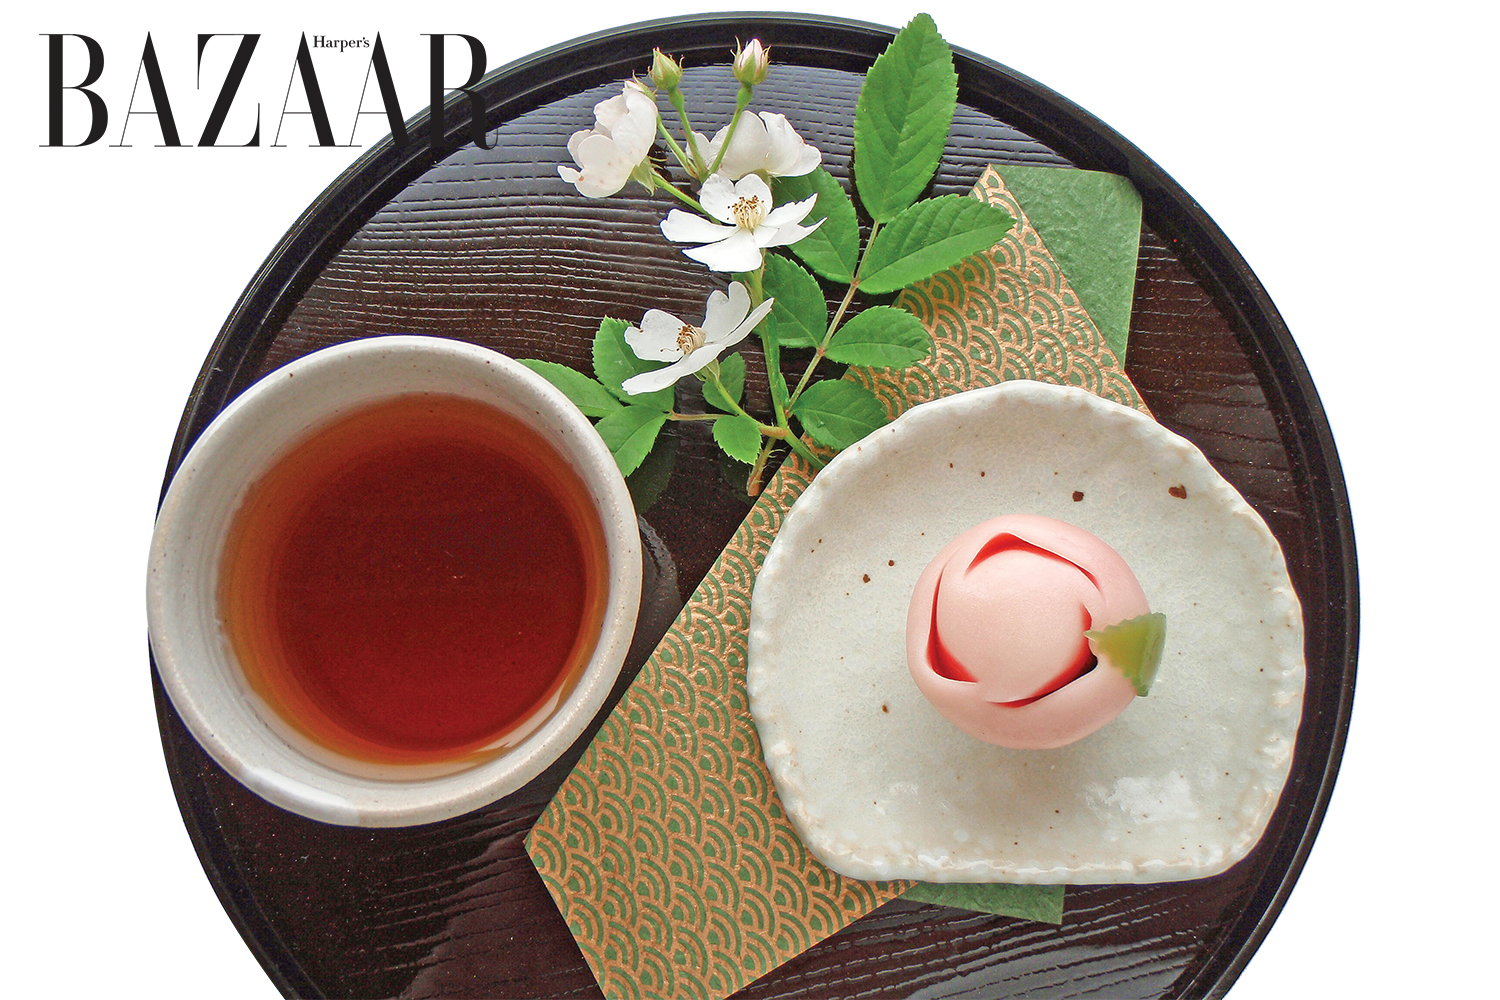 Harper's Bazaar_bánh hoa wagashi trong văn hóa Nhật Bản_03